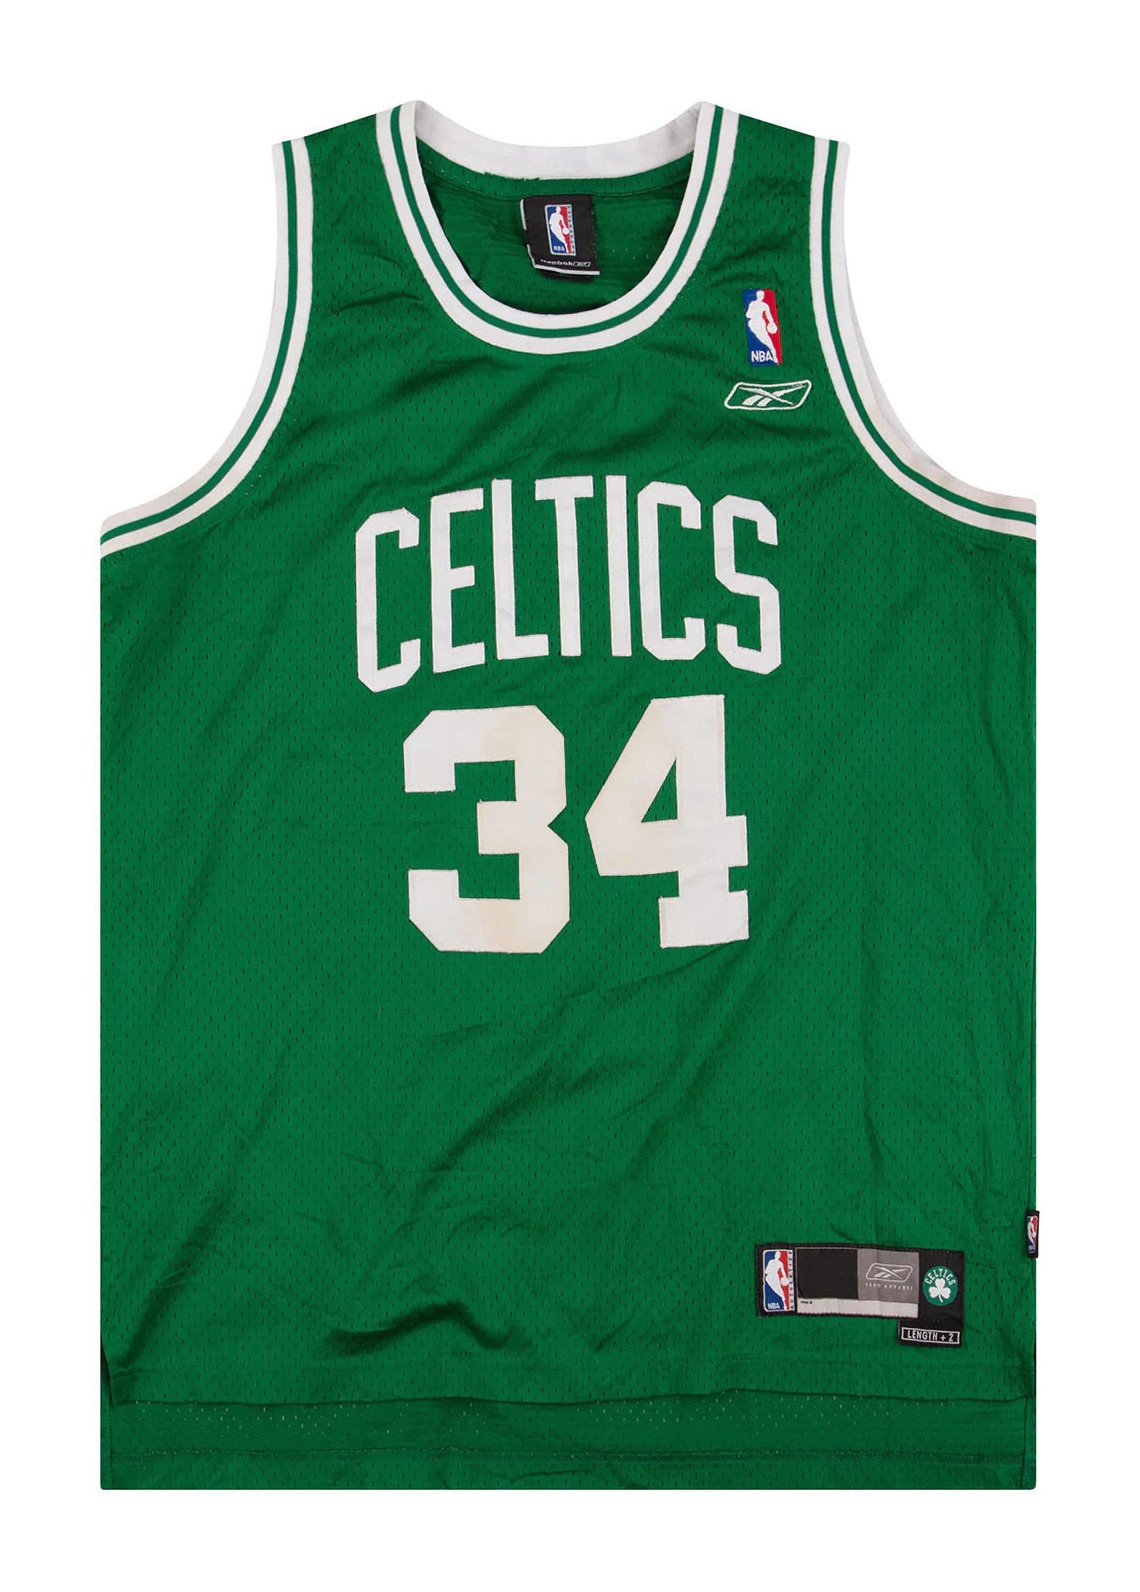 2004-05 Season Archives - Boston Celtics History